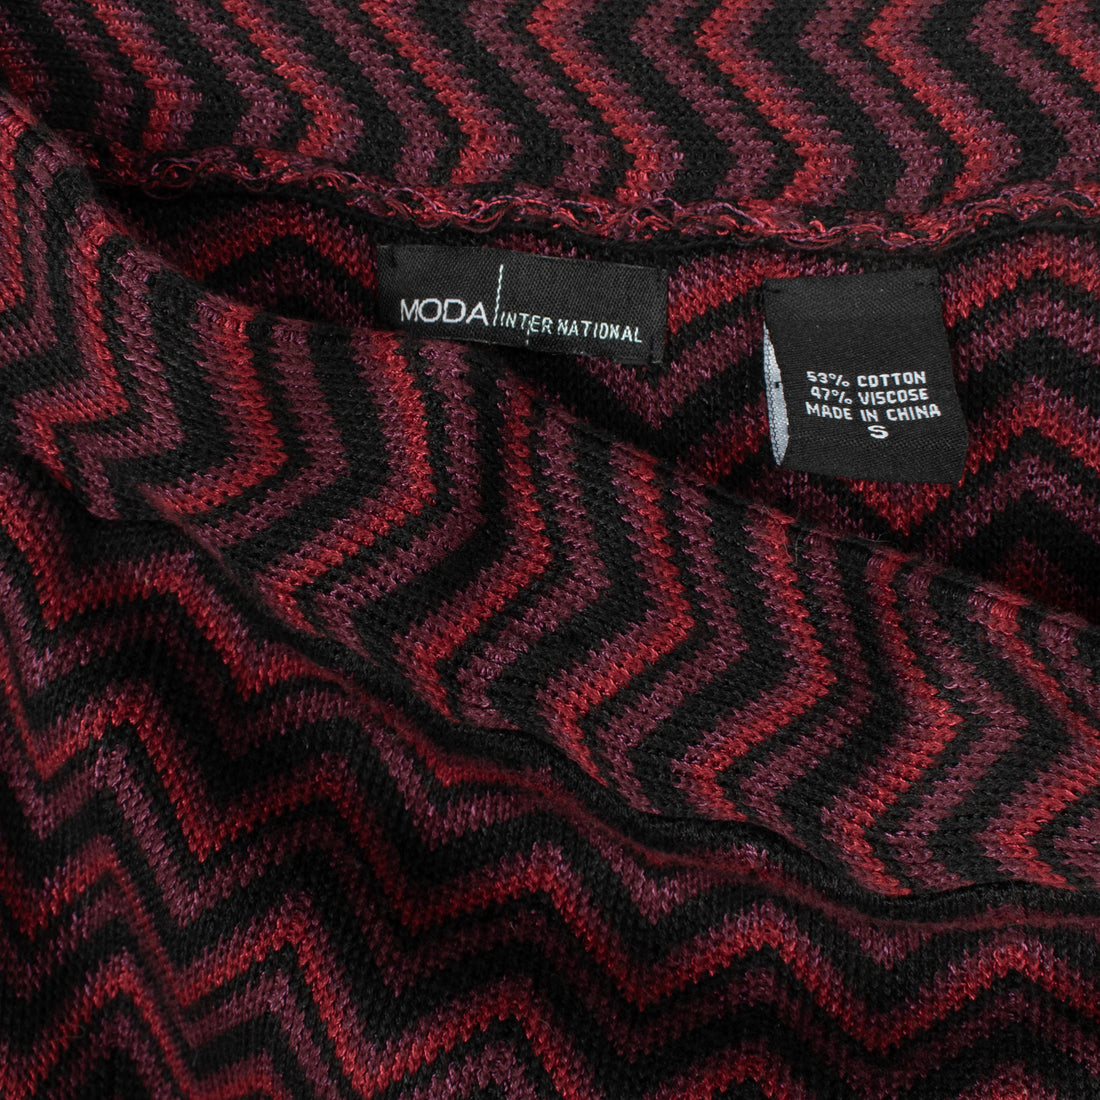 Chevron Knit Maxi Skirt